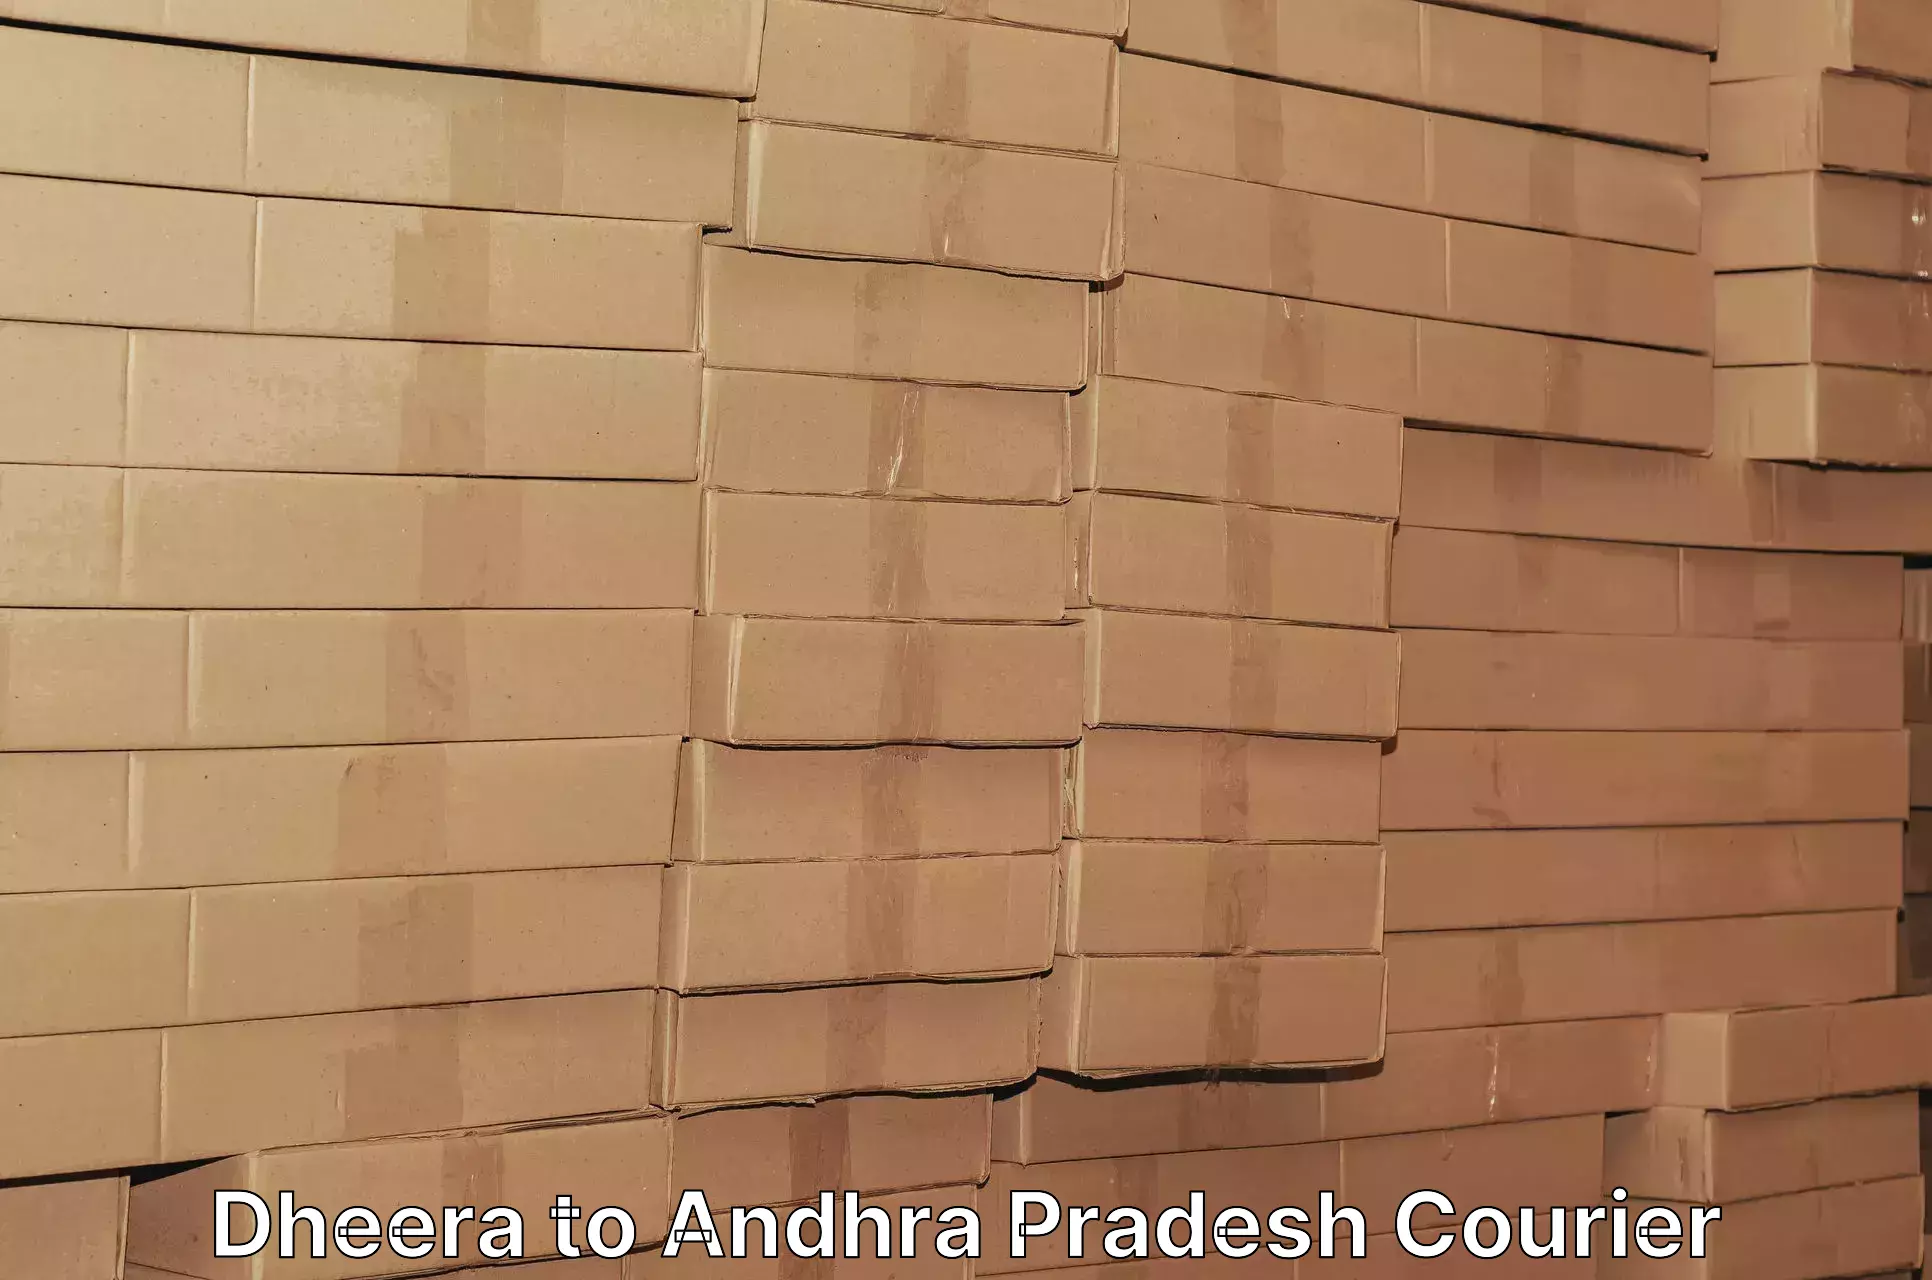 Digital courier platforms Dheera to Andhra Pradesh